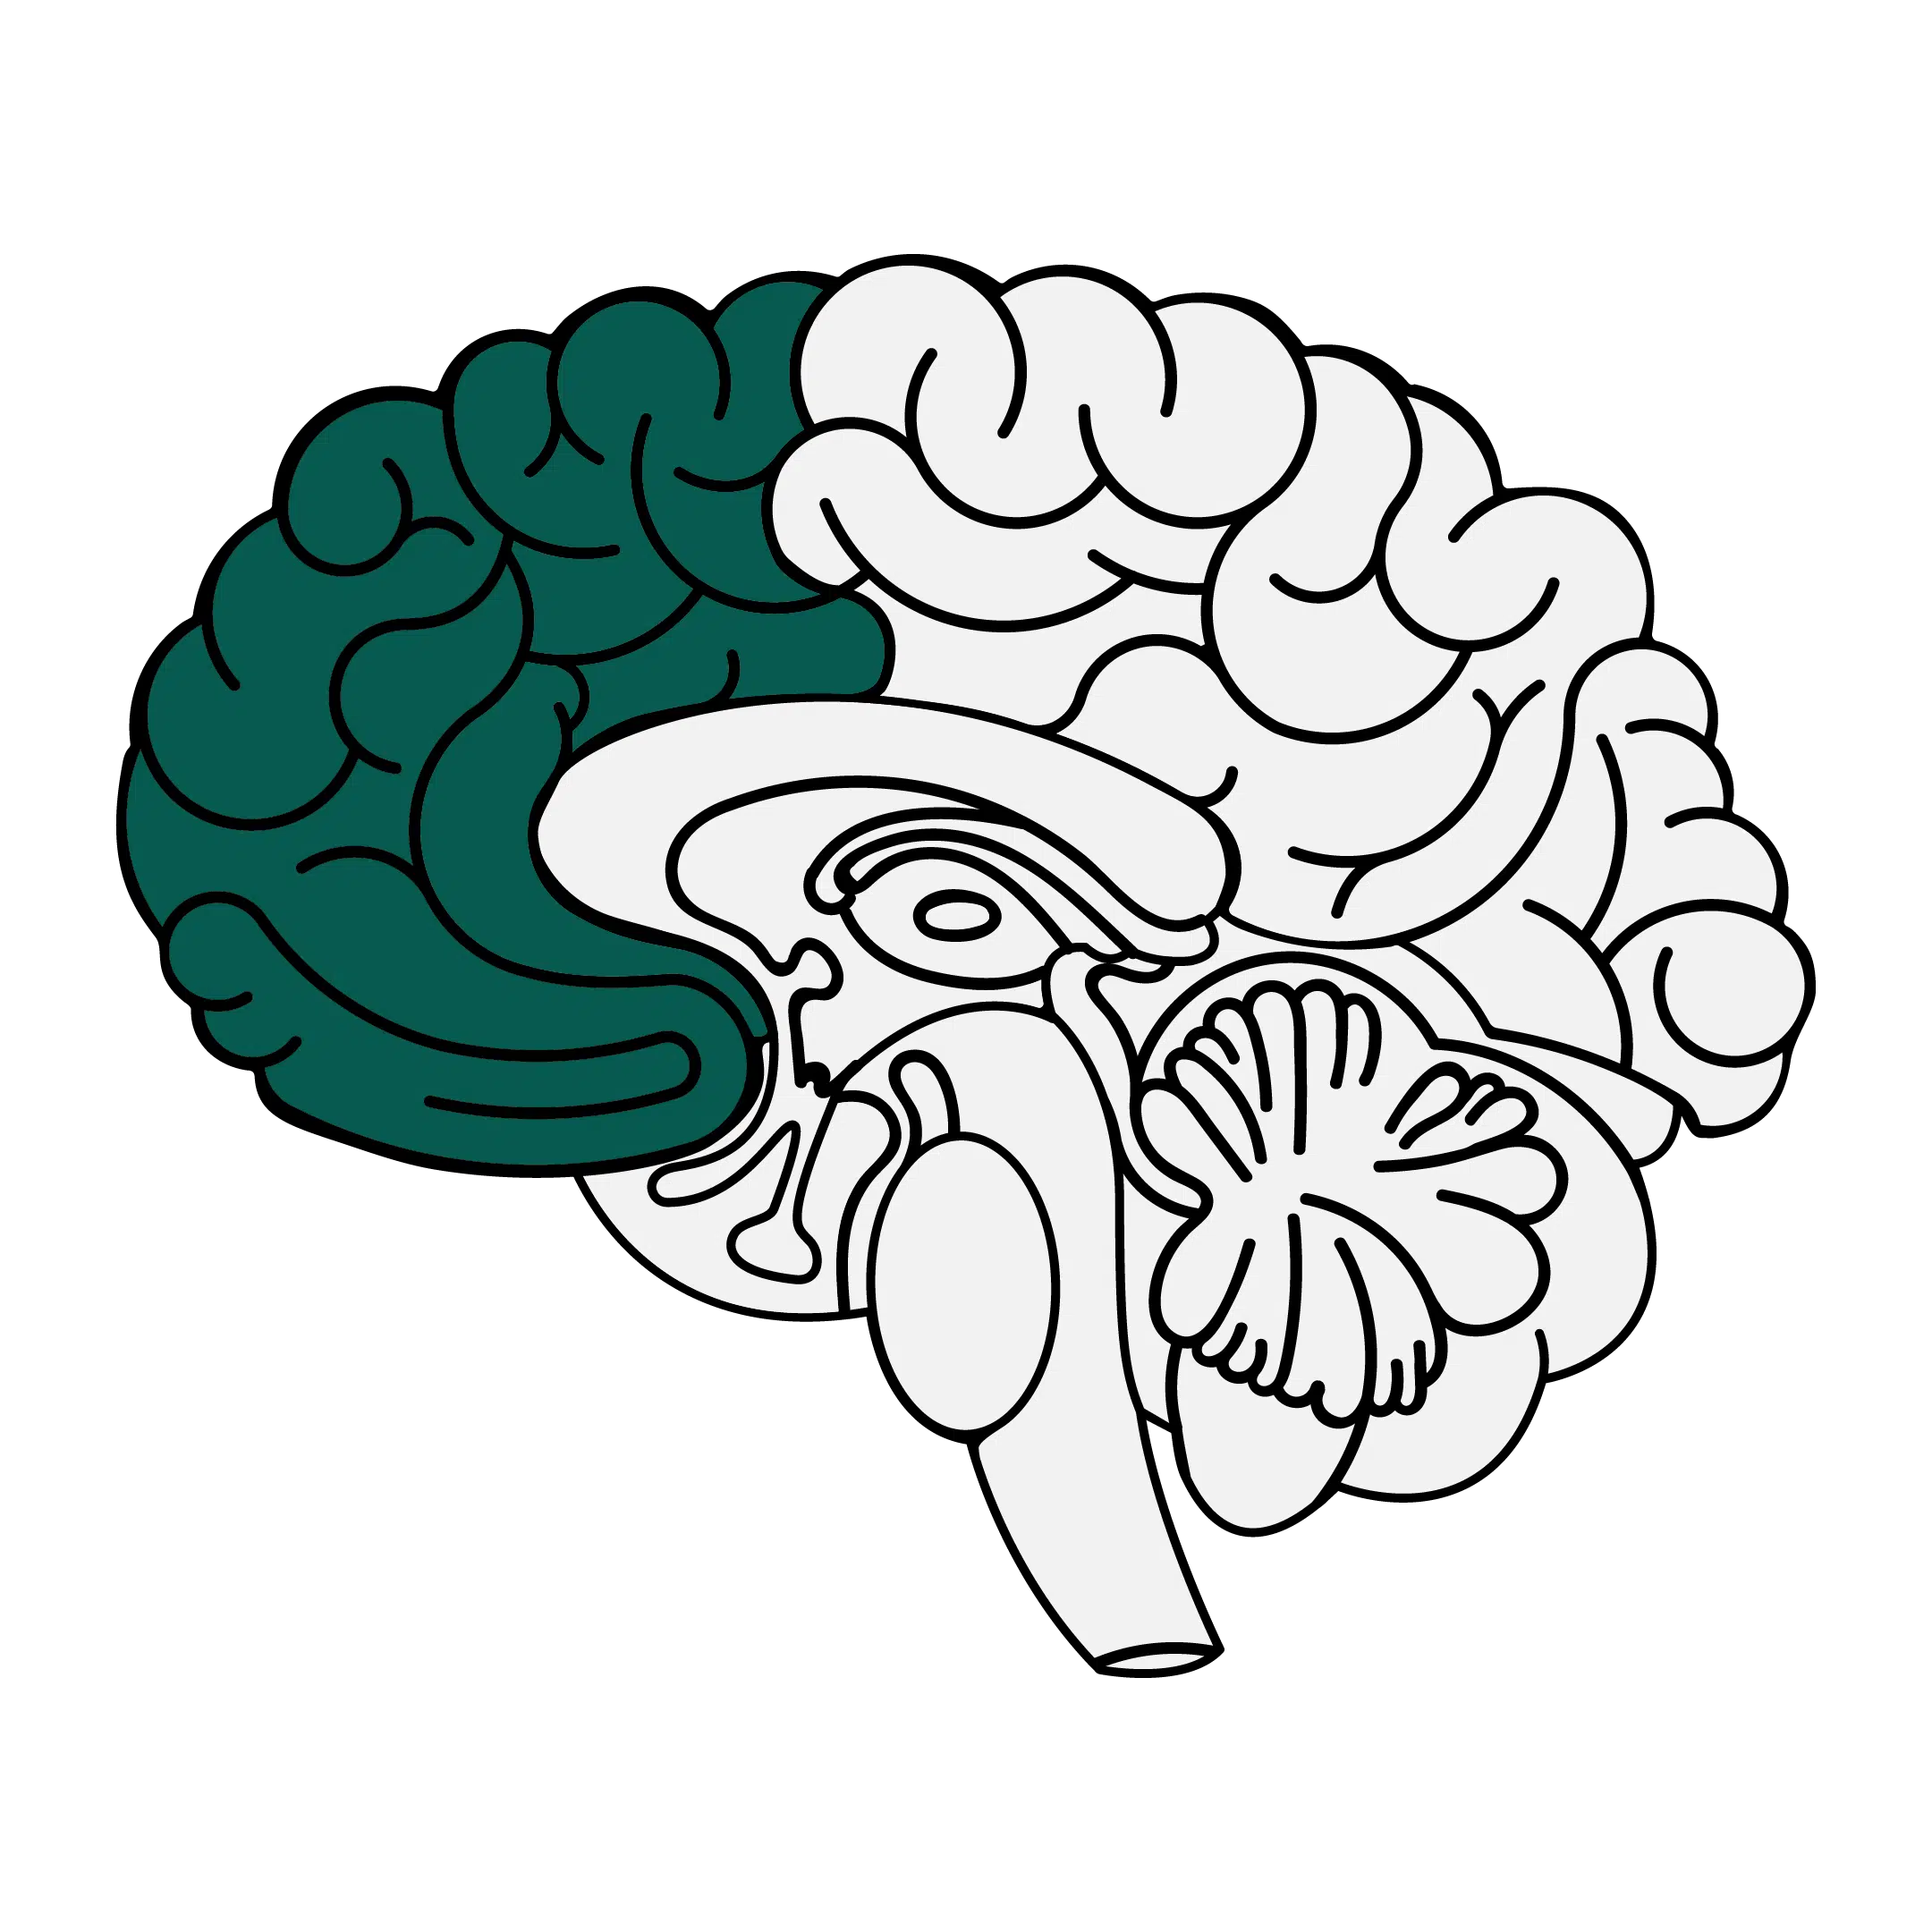 illustration of the brain highlighting the frontal lobe